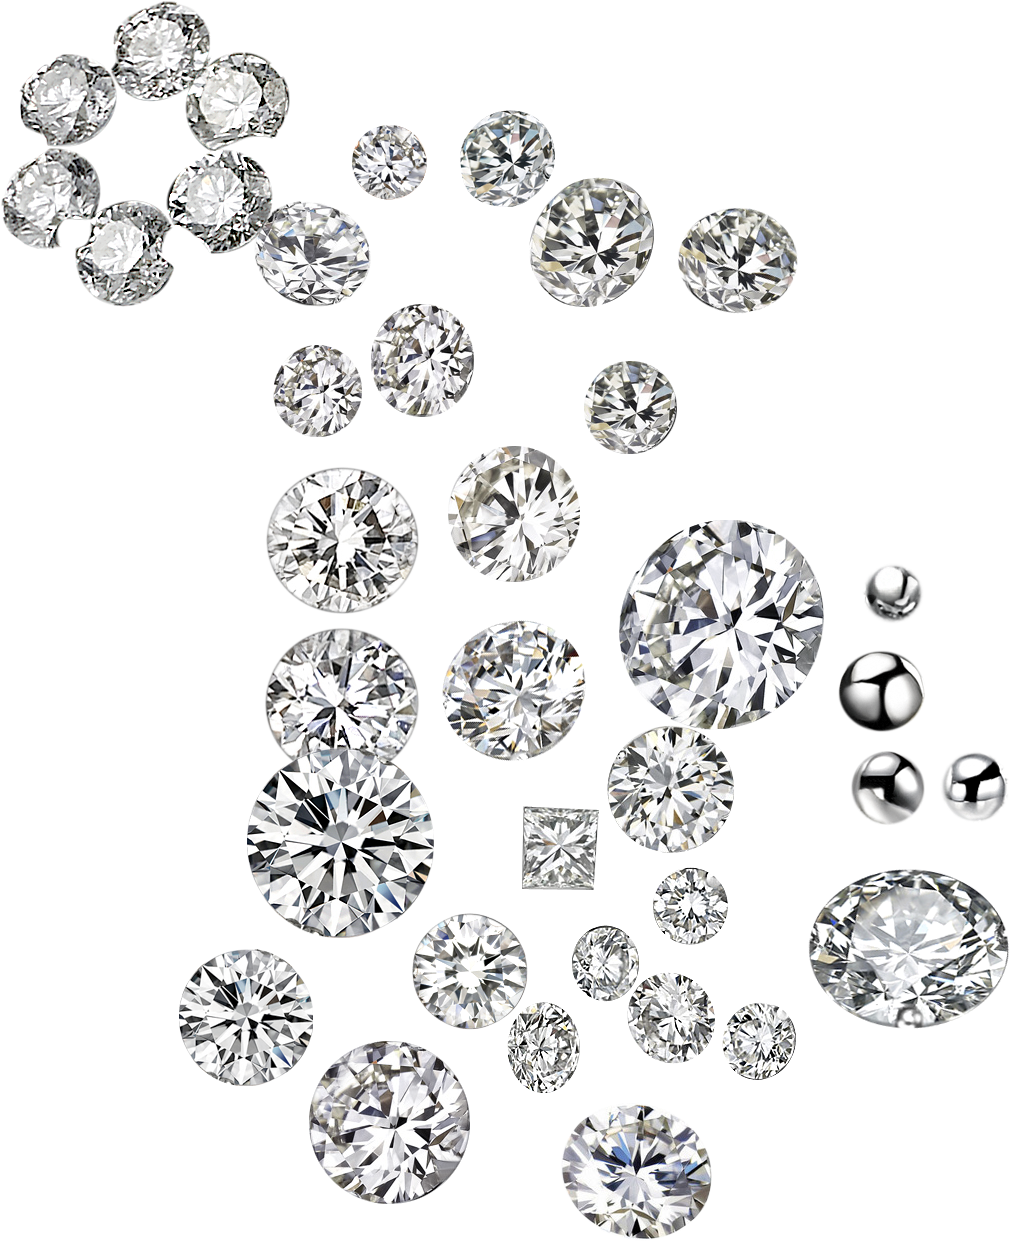 A Group Of Diamonds On A Black Background